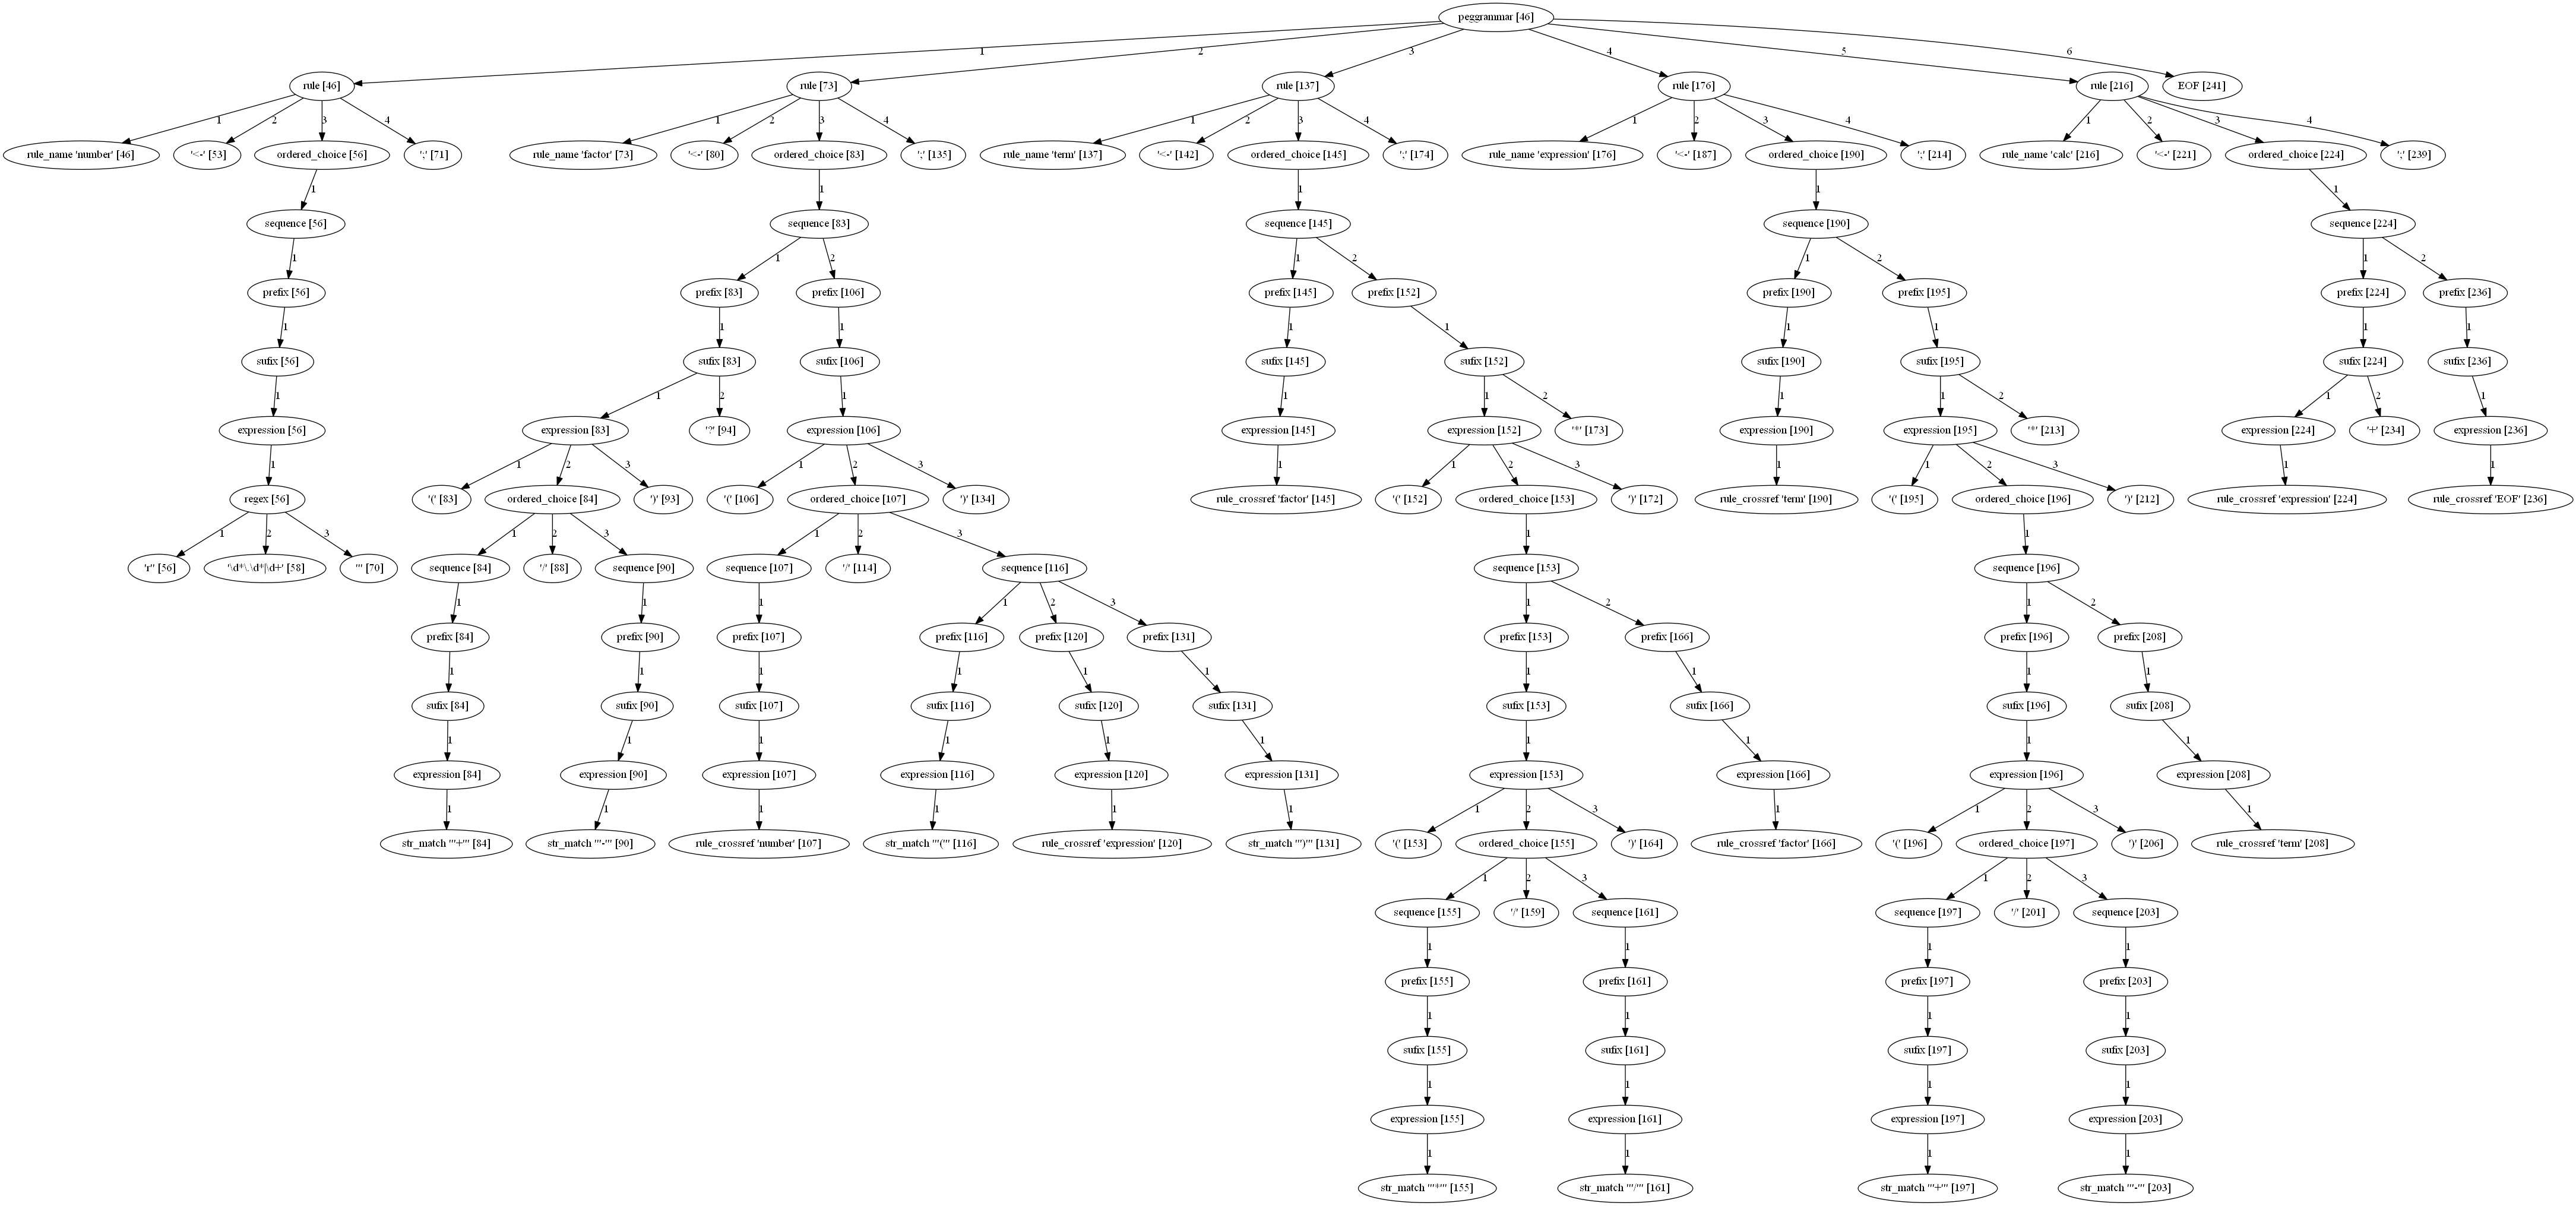 peggrammar_parse_tree.dot